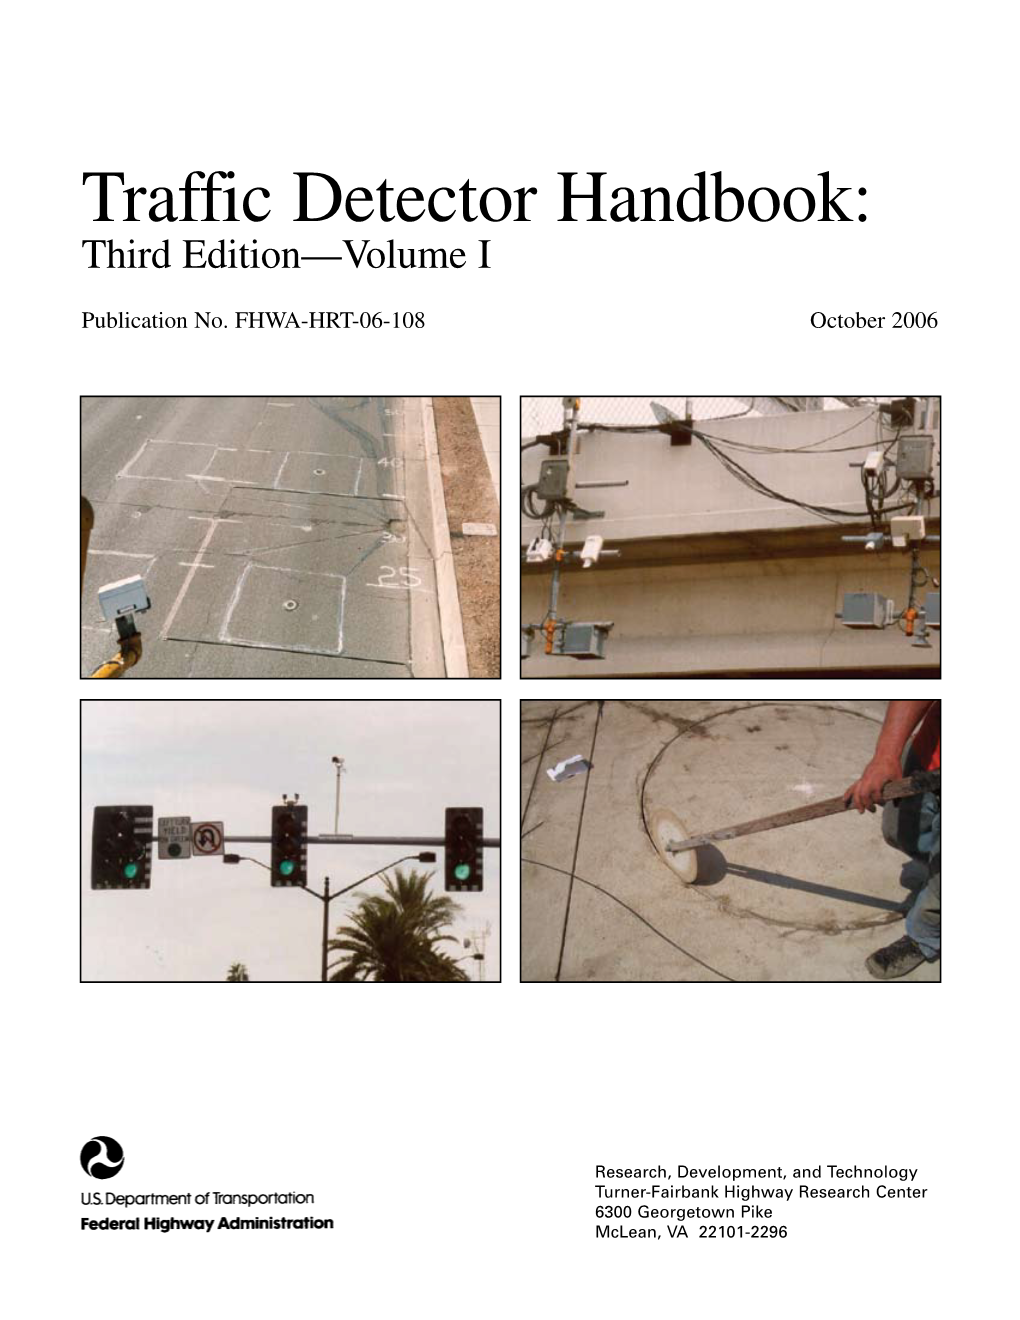 Traffic Detector Handbook: Third Edition—Volume I